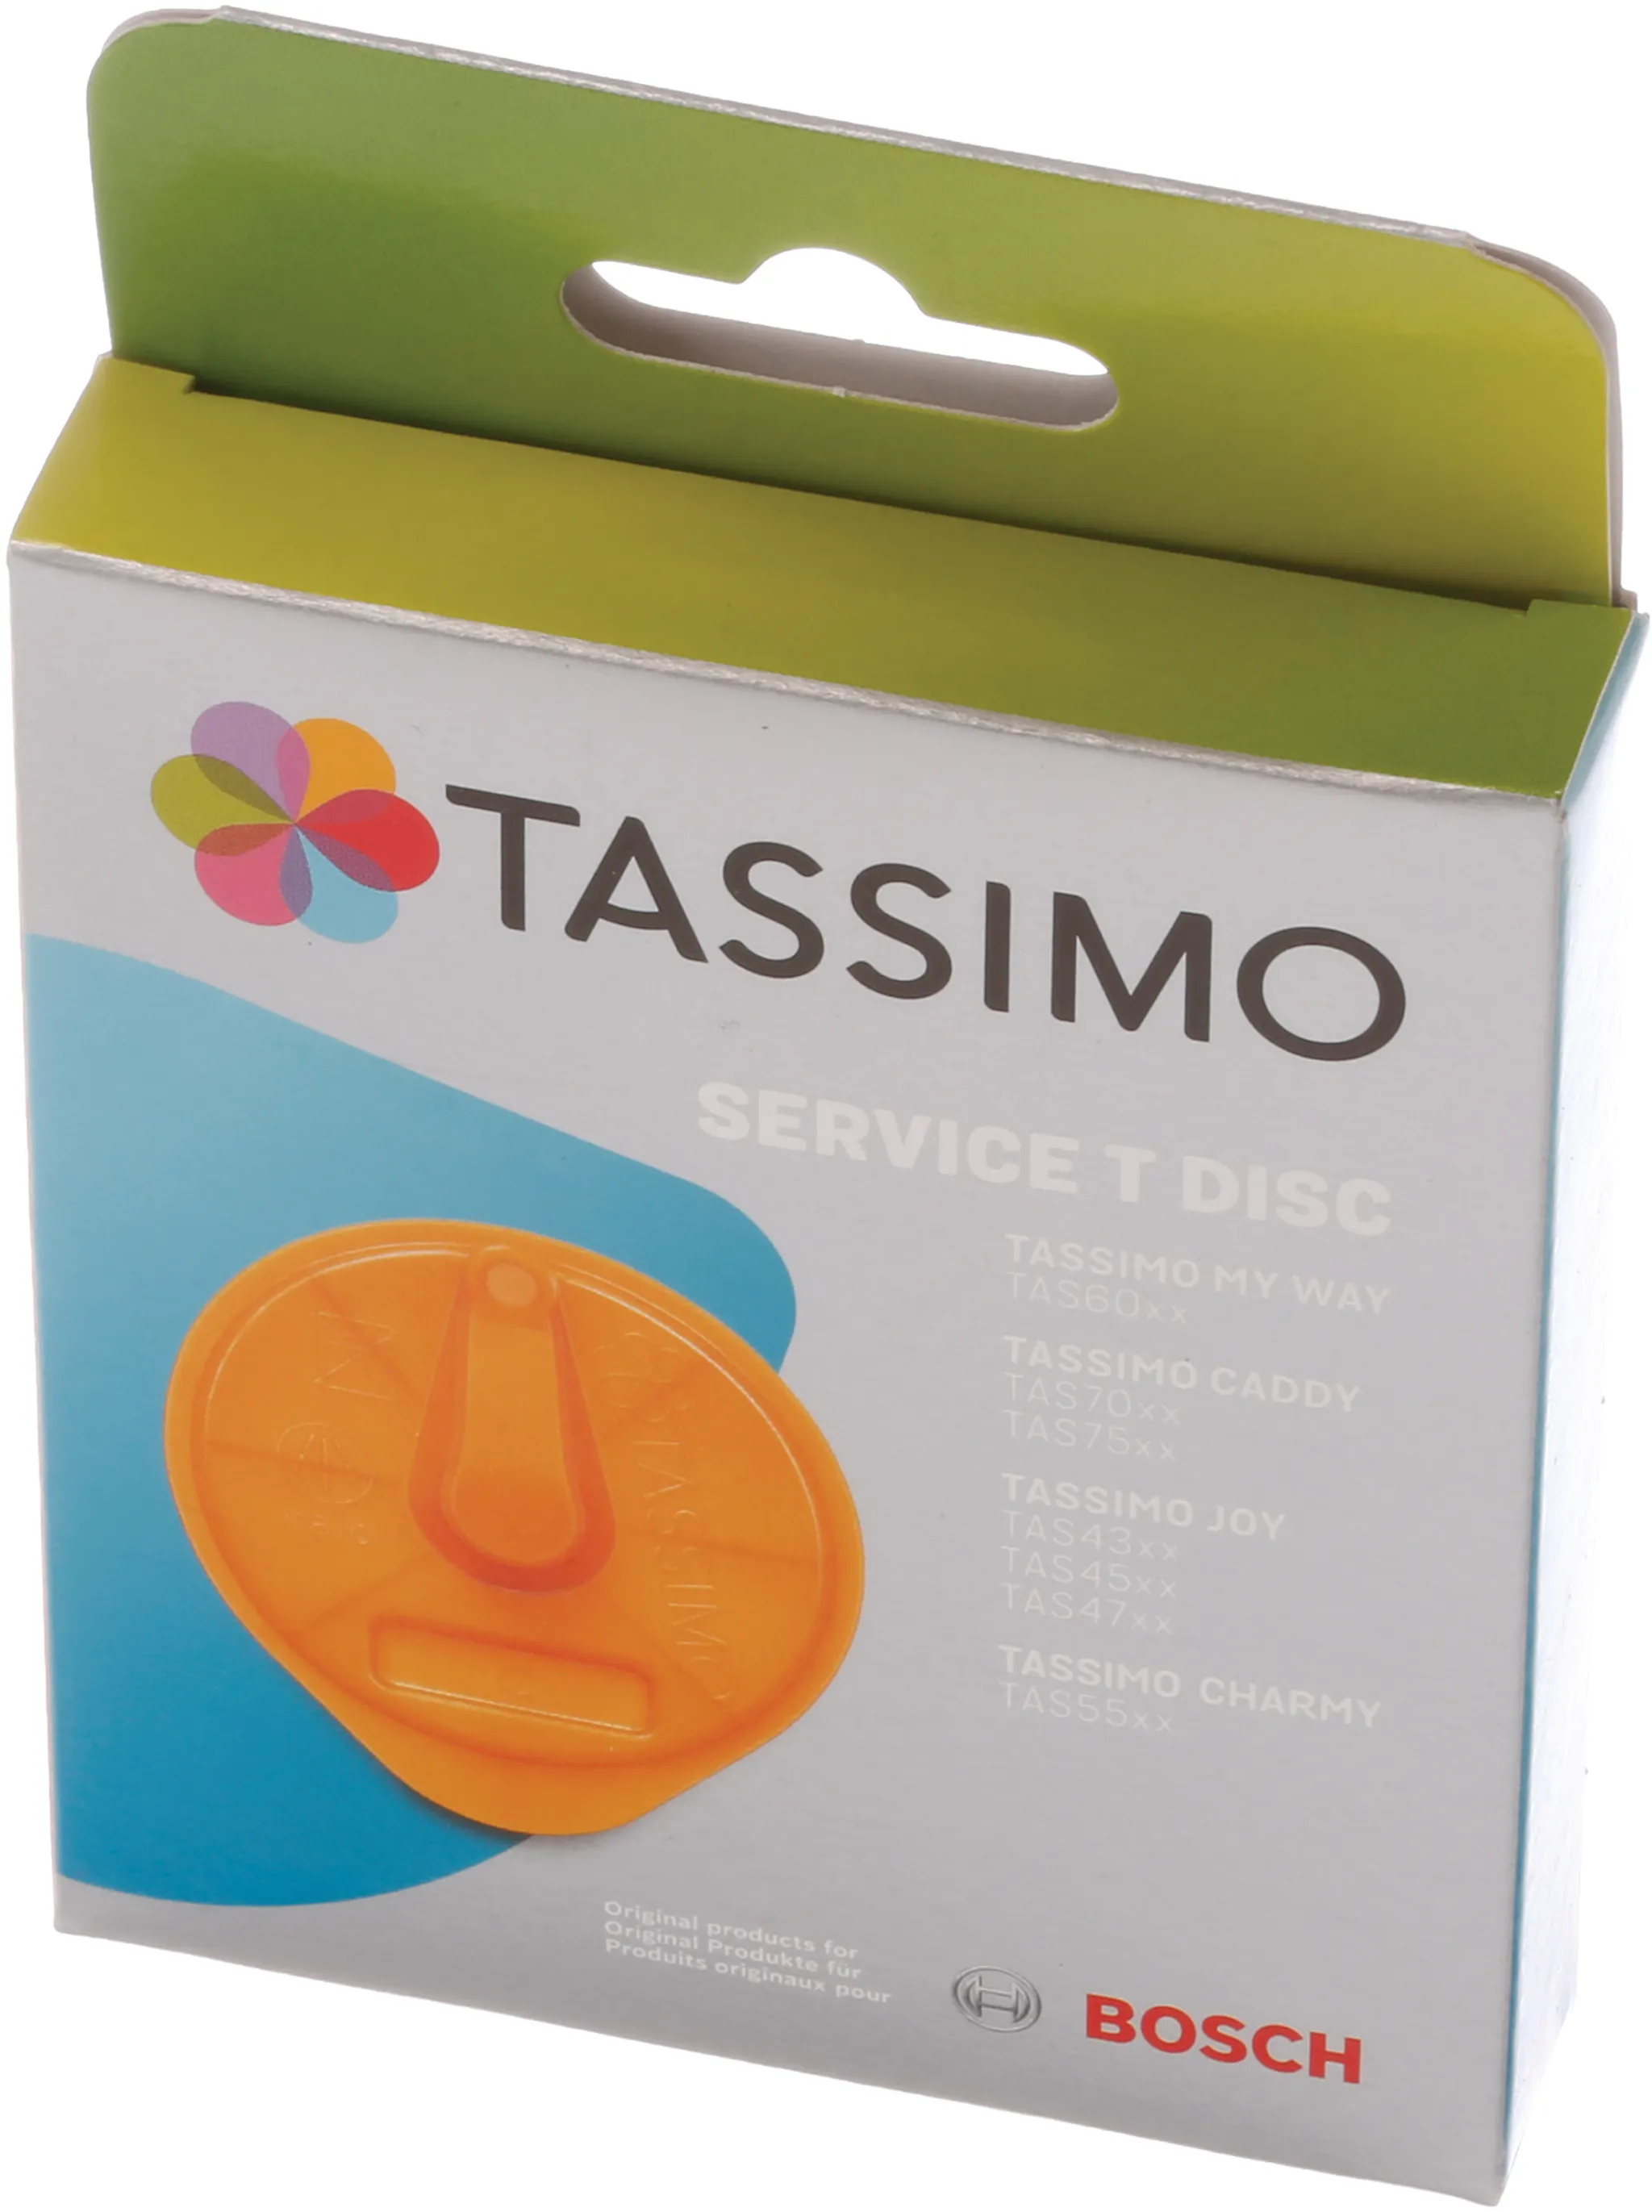 GENUINE BOSCH TASSIMO ORANGE SERVICE T-DISC FOR COFFEE MACHINES